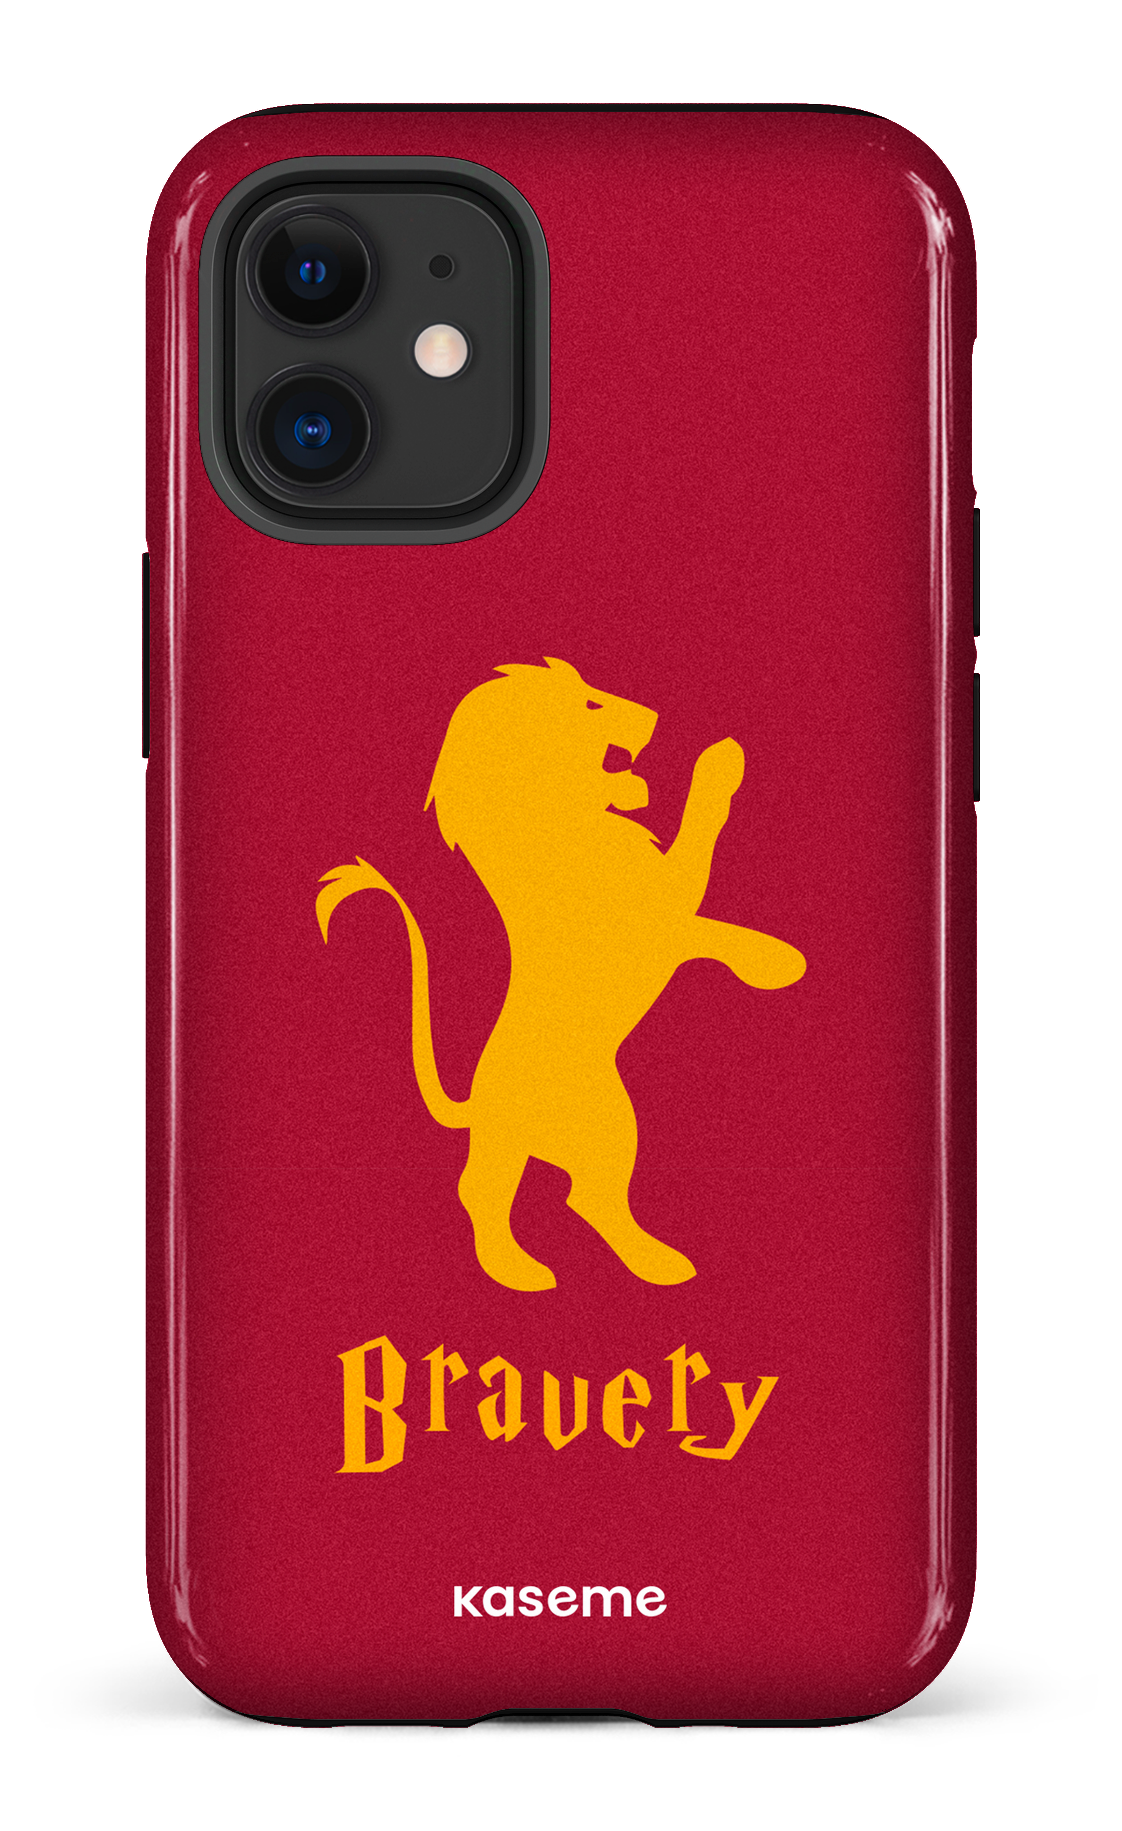 Bravery - iPhone 12 Mini